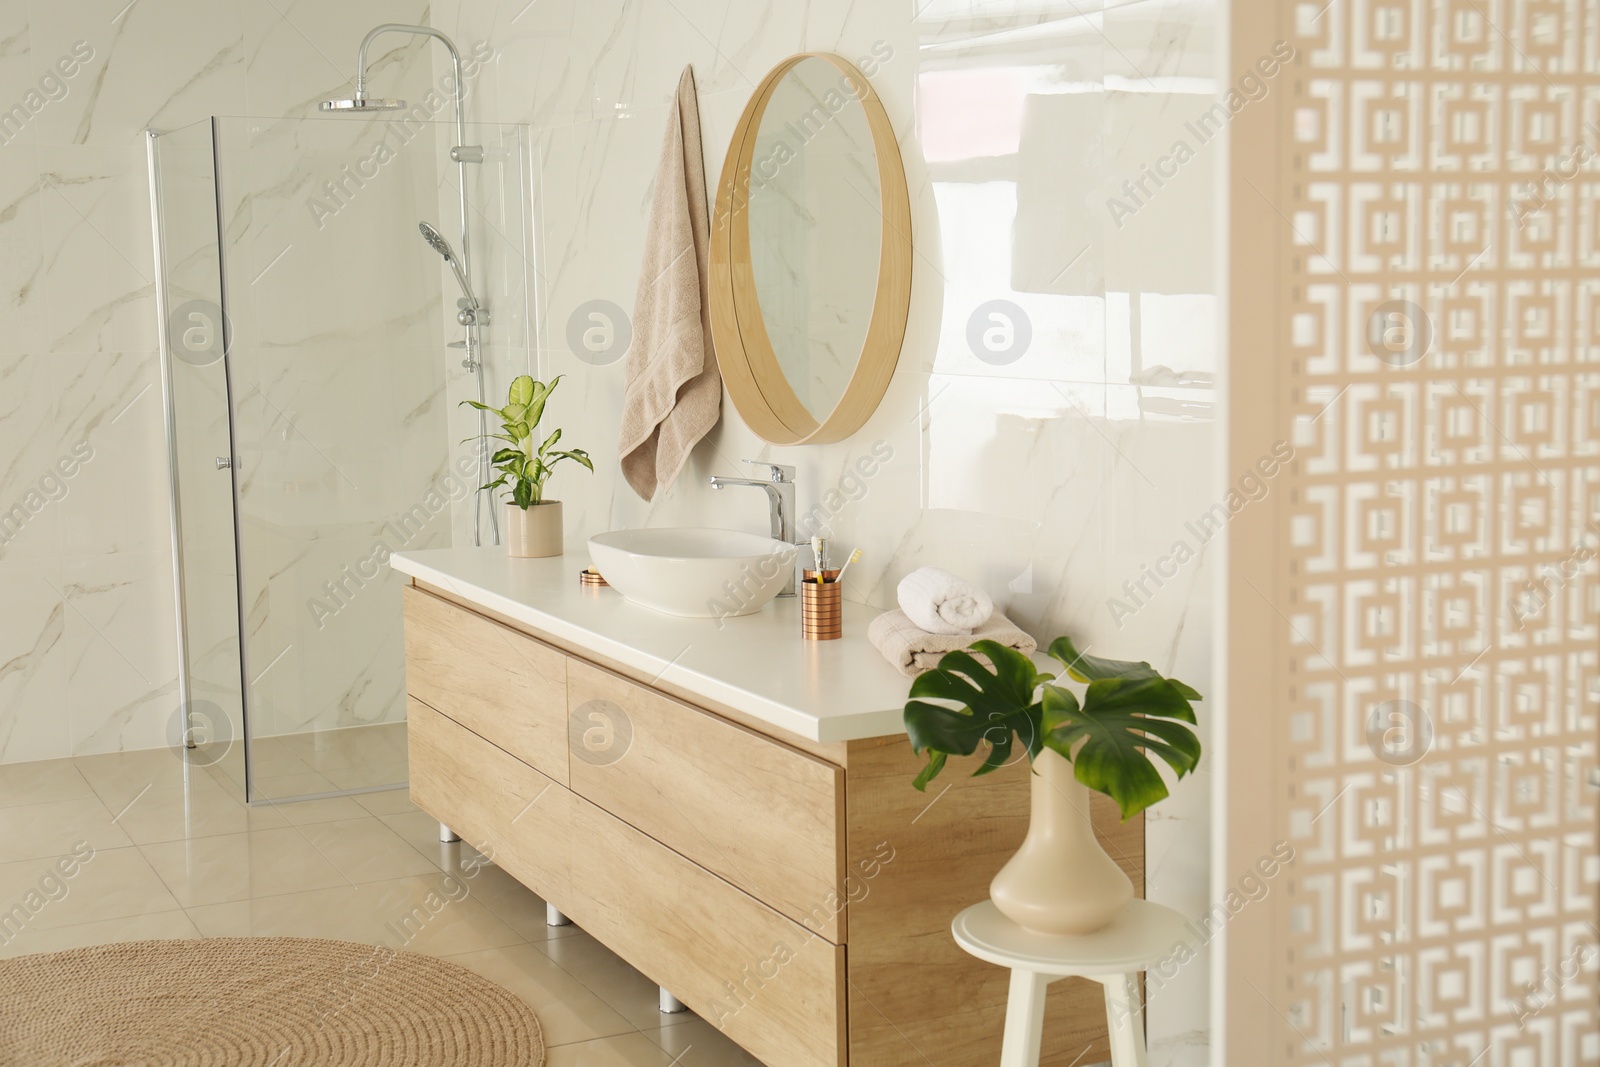 Photo of Round mirror over vessel sink in stylish bathroom interior